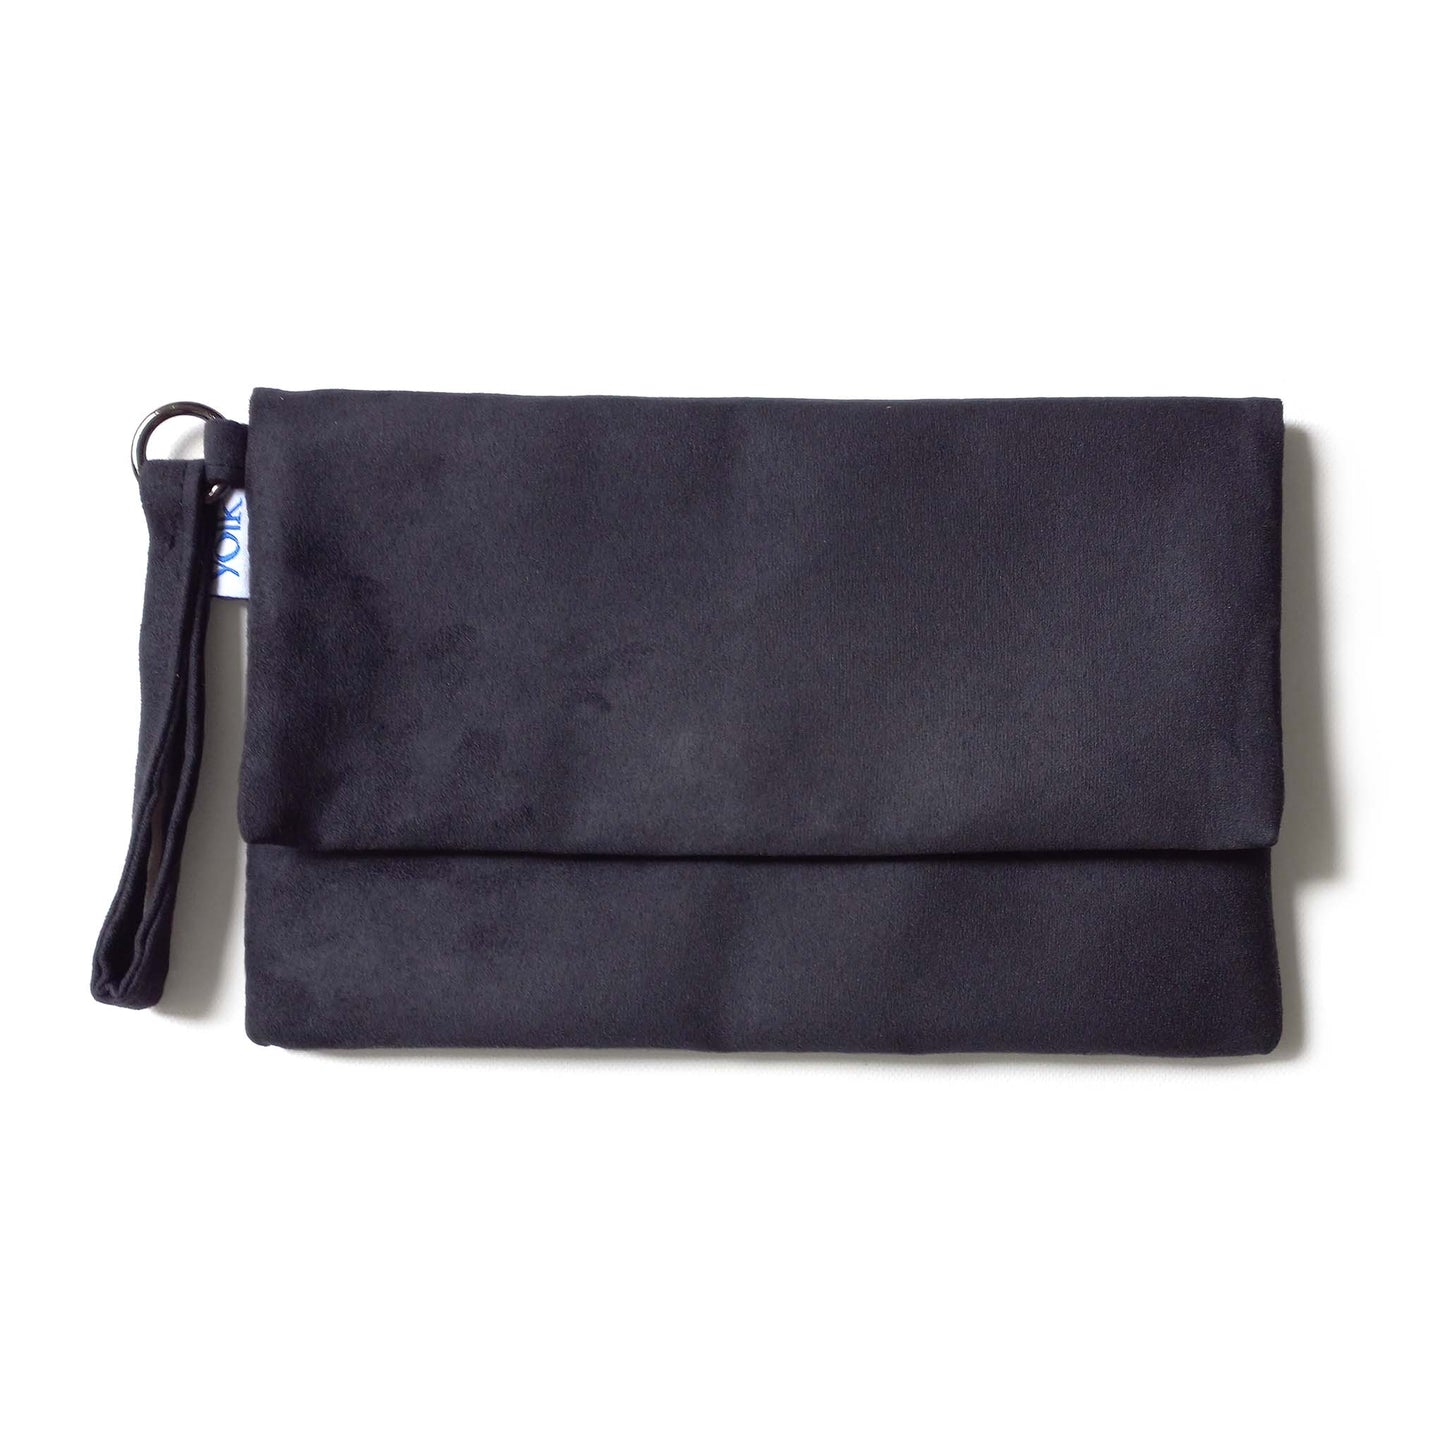 Black suede clutch bag